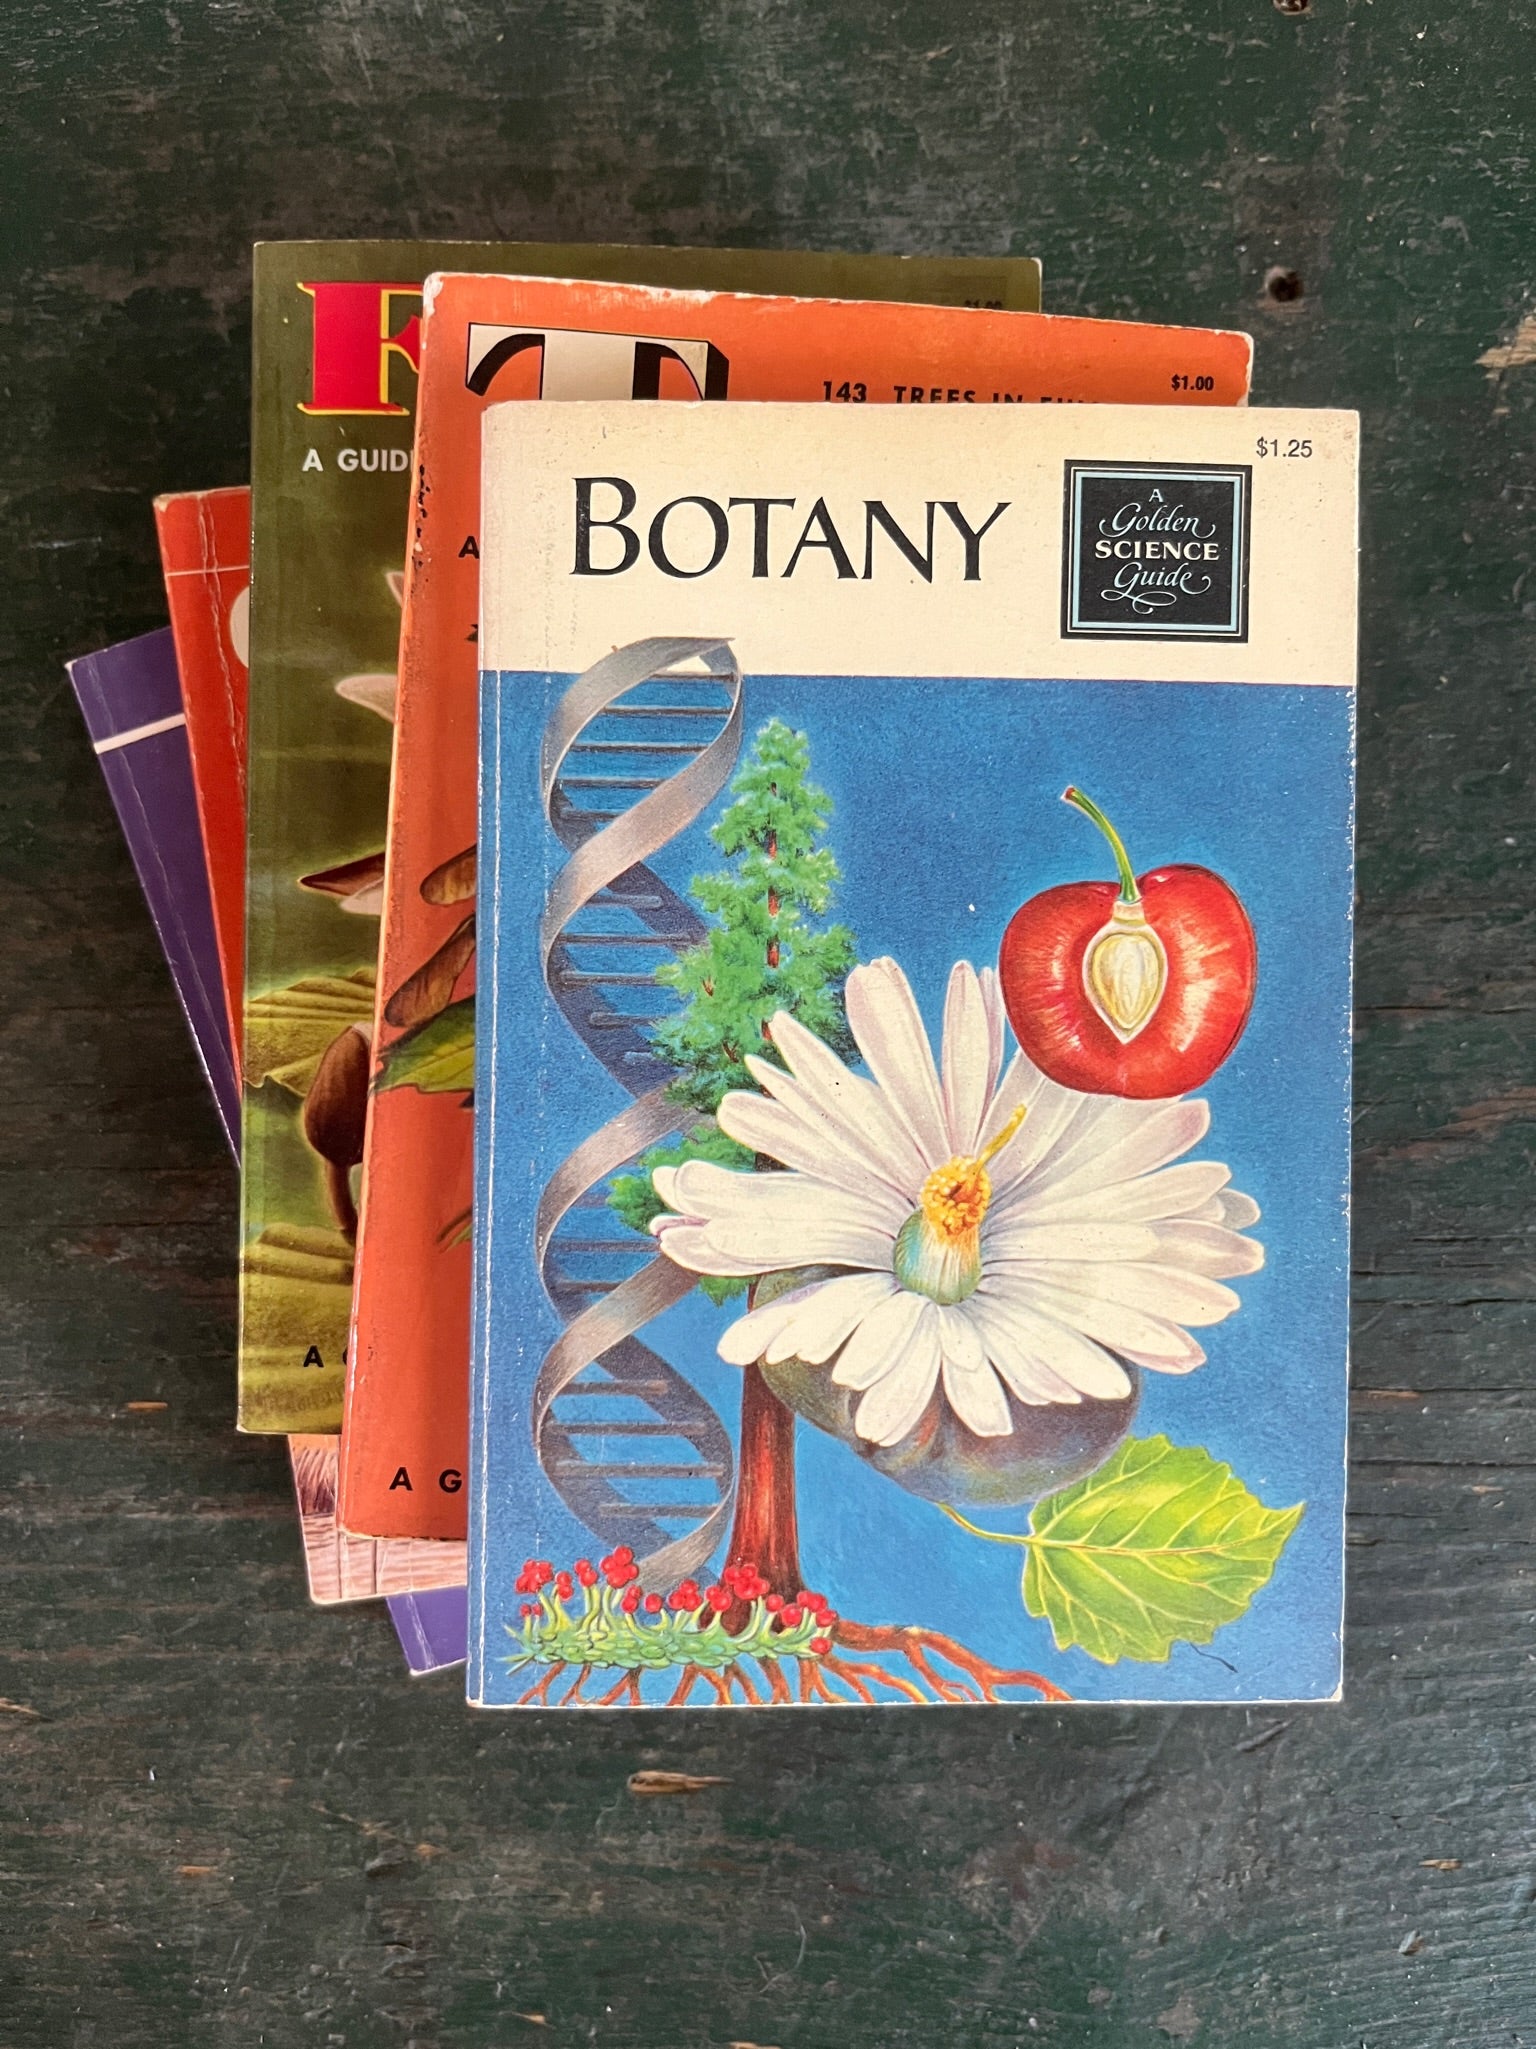 A Golden Guide Book - Botany